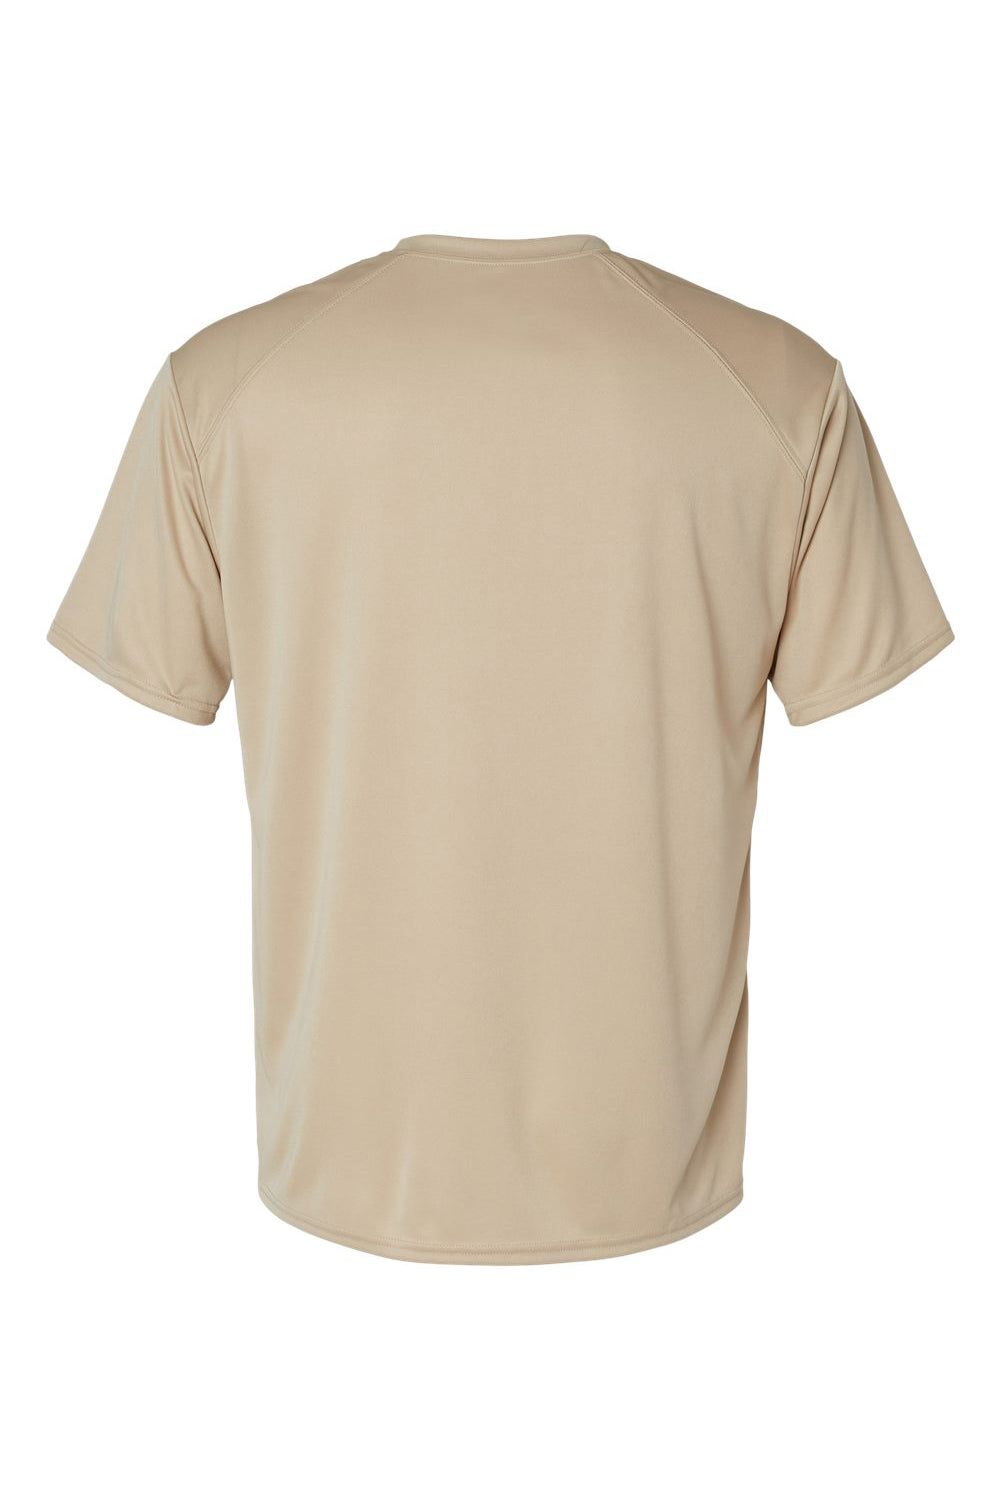 Badger 4120 Mens B-Core Moisture Wicking Short Sleeve Crewneck T-Shirt Sand Flat Back